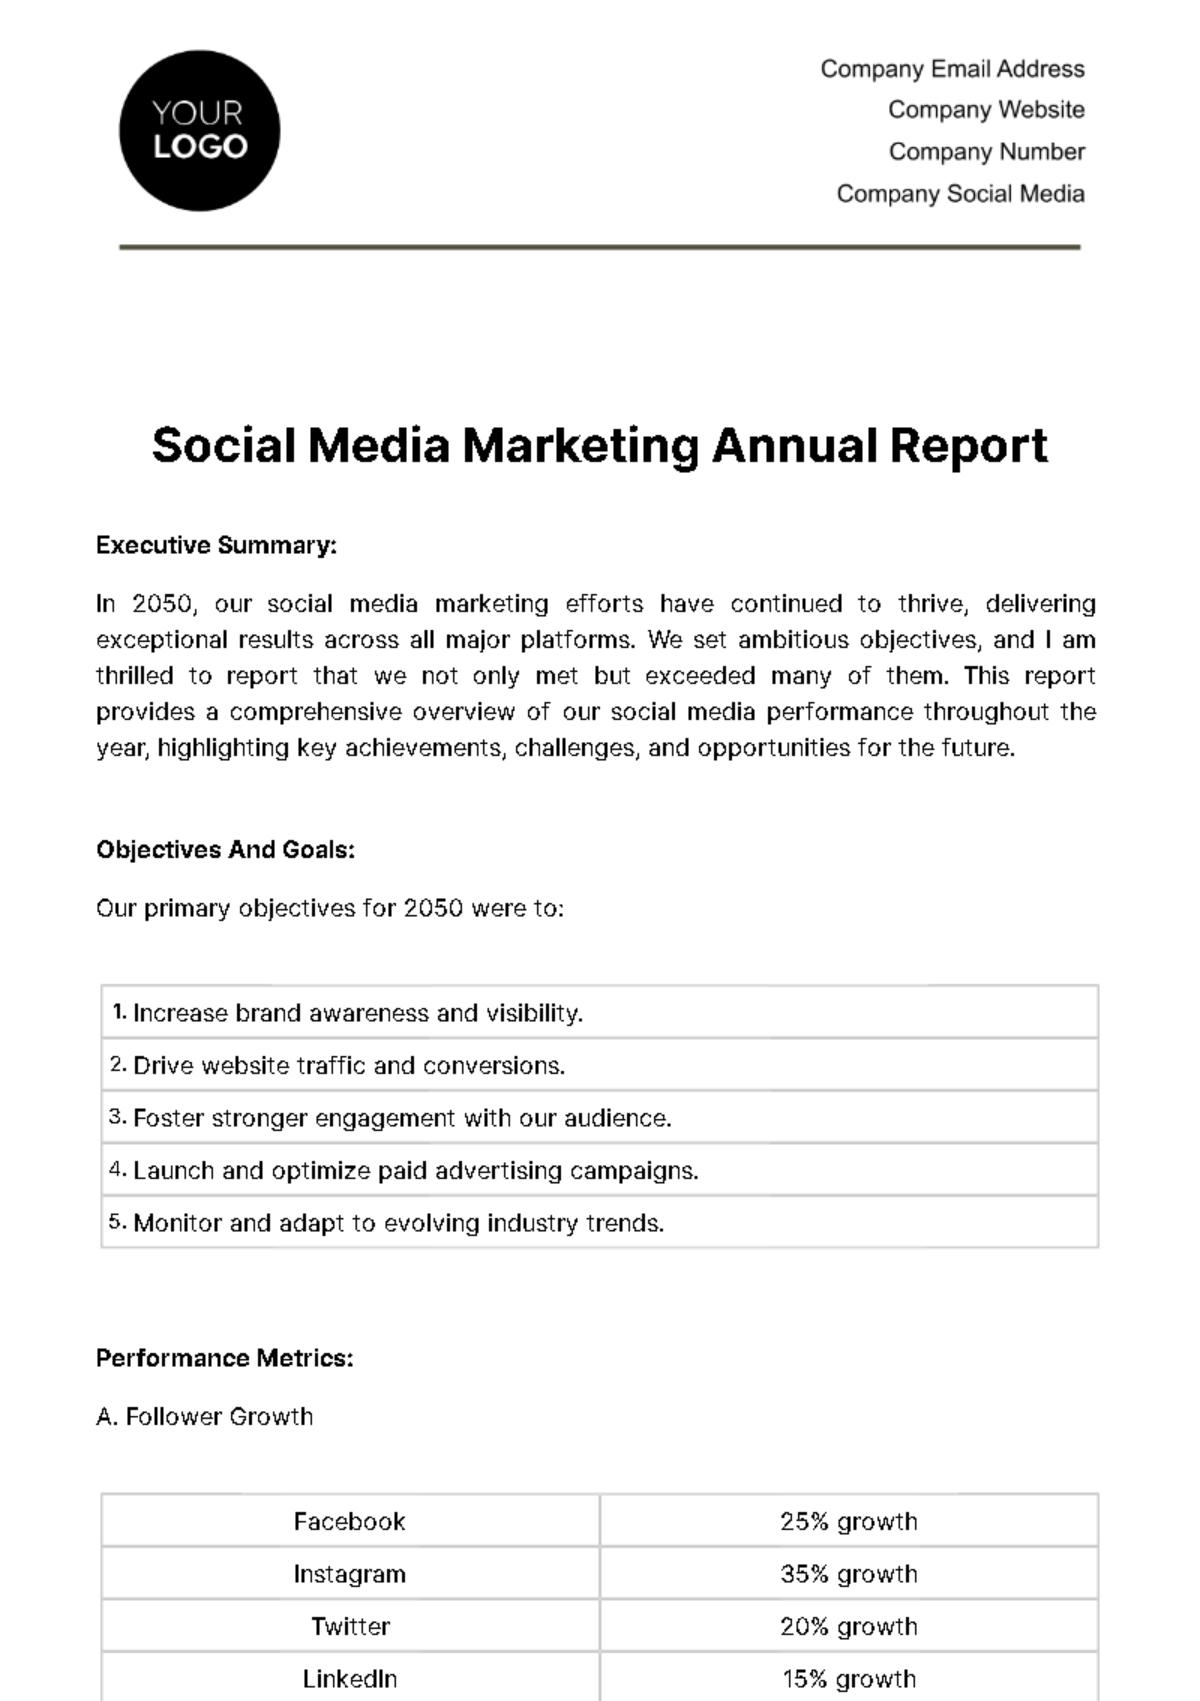 Free Social Media Marketing Annual Report Template